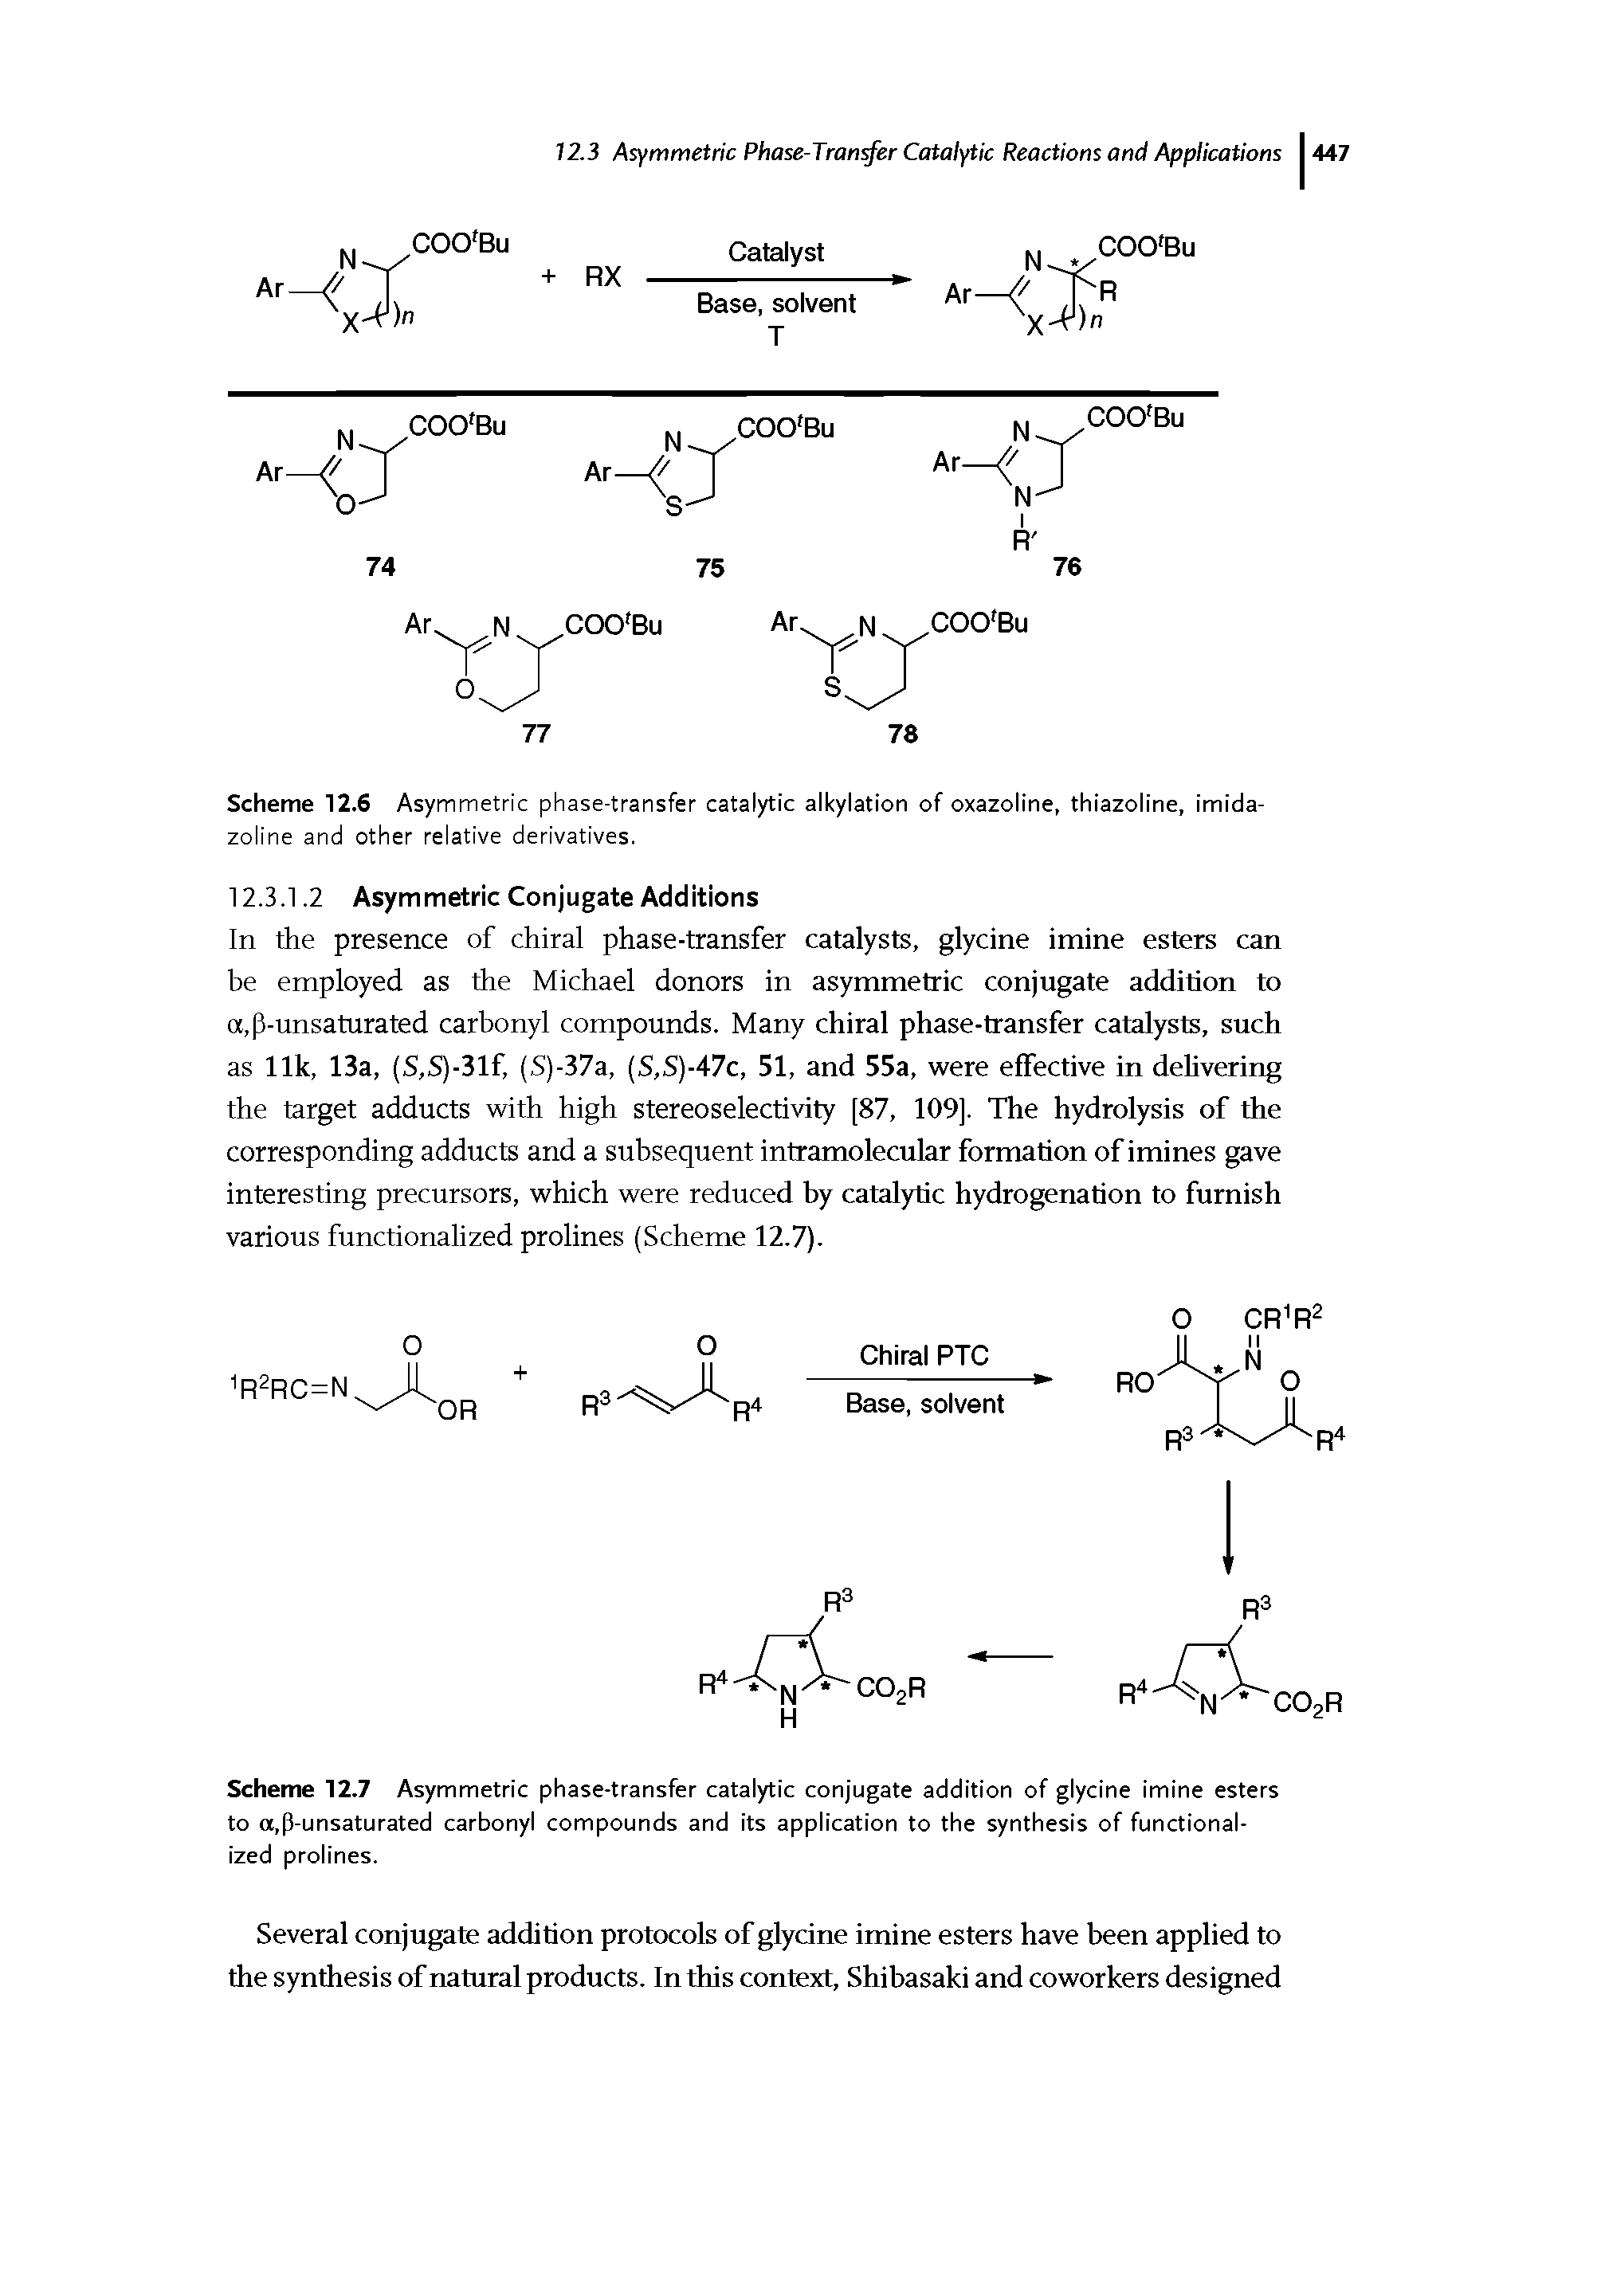 Scheme 12.6 Asymmetric phase-transfer catalytic alkylation of oxazoline, thiazoline, imidazoline and other relative derivatives.